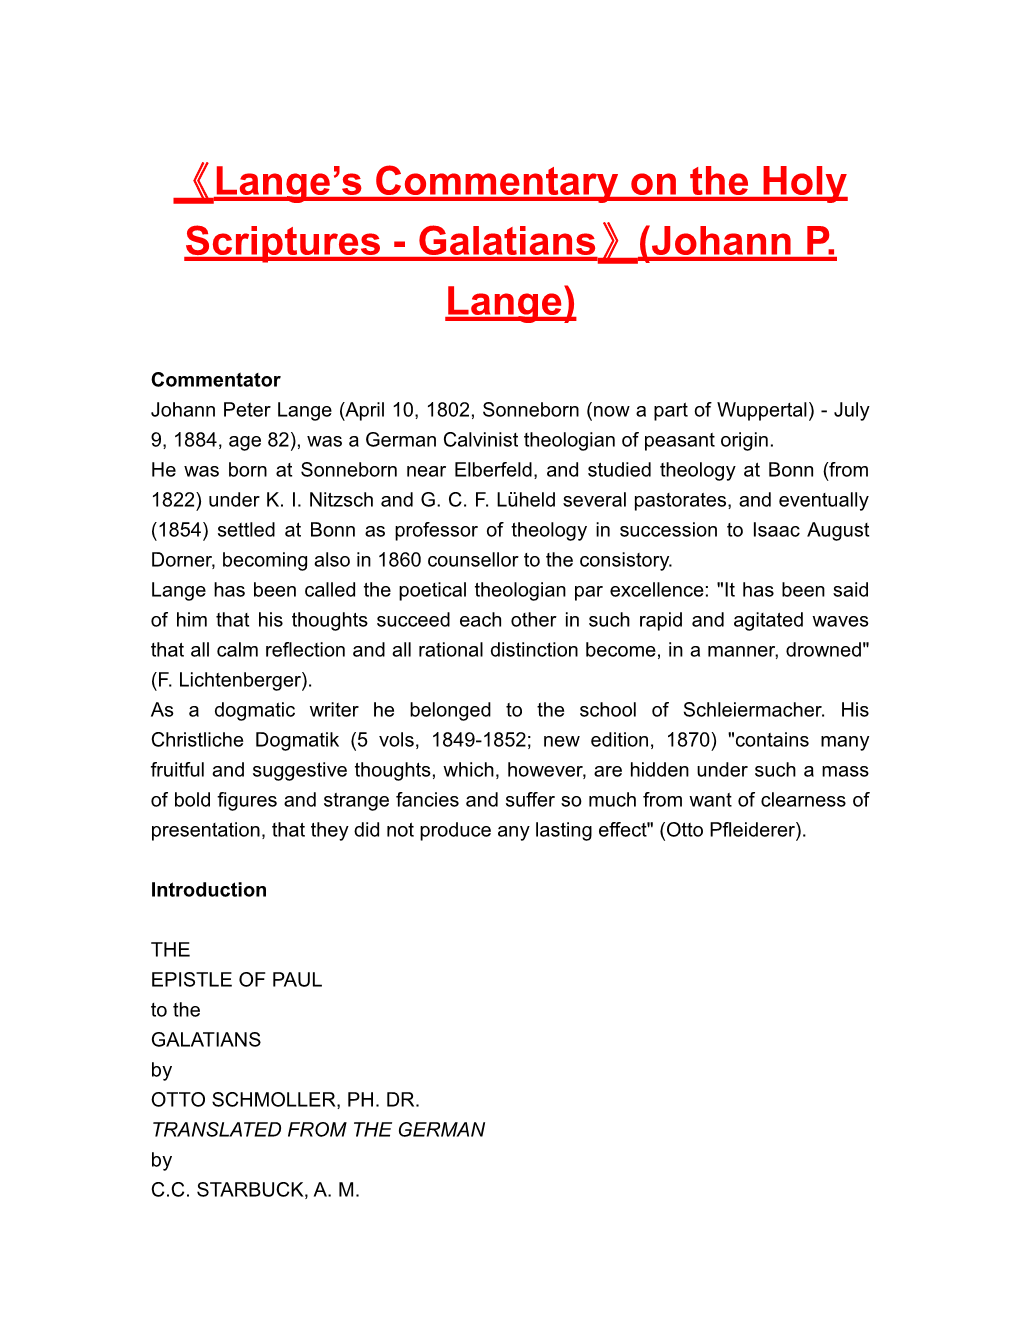 Lange S Commentary on the Holyscriptures-Galatians (Johann P. Lange)